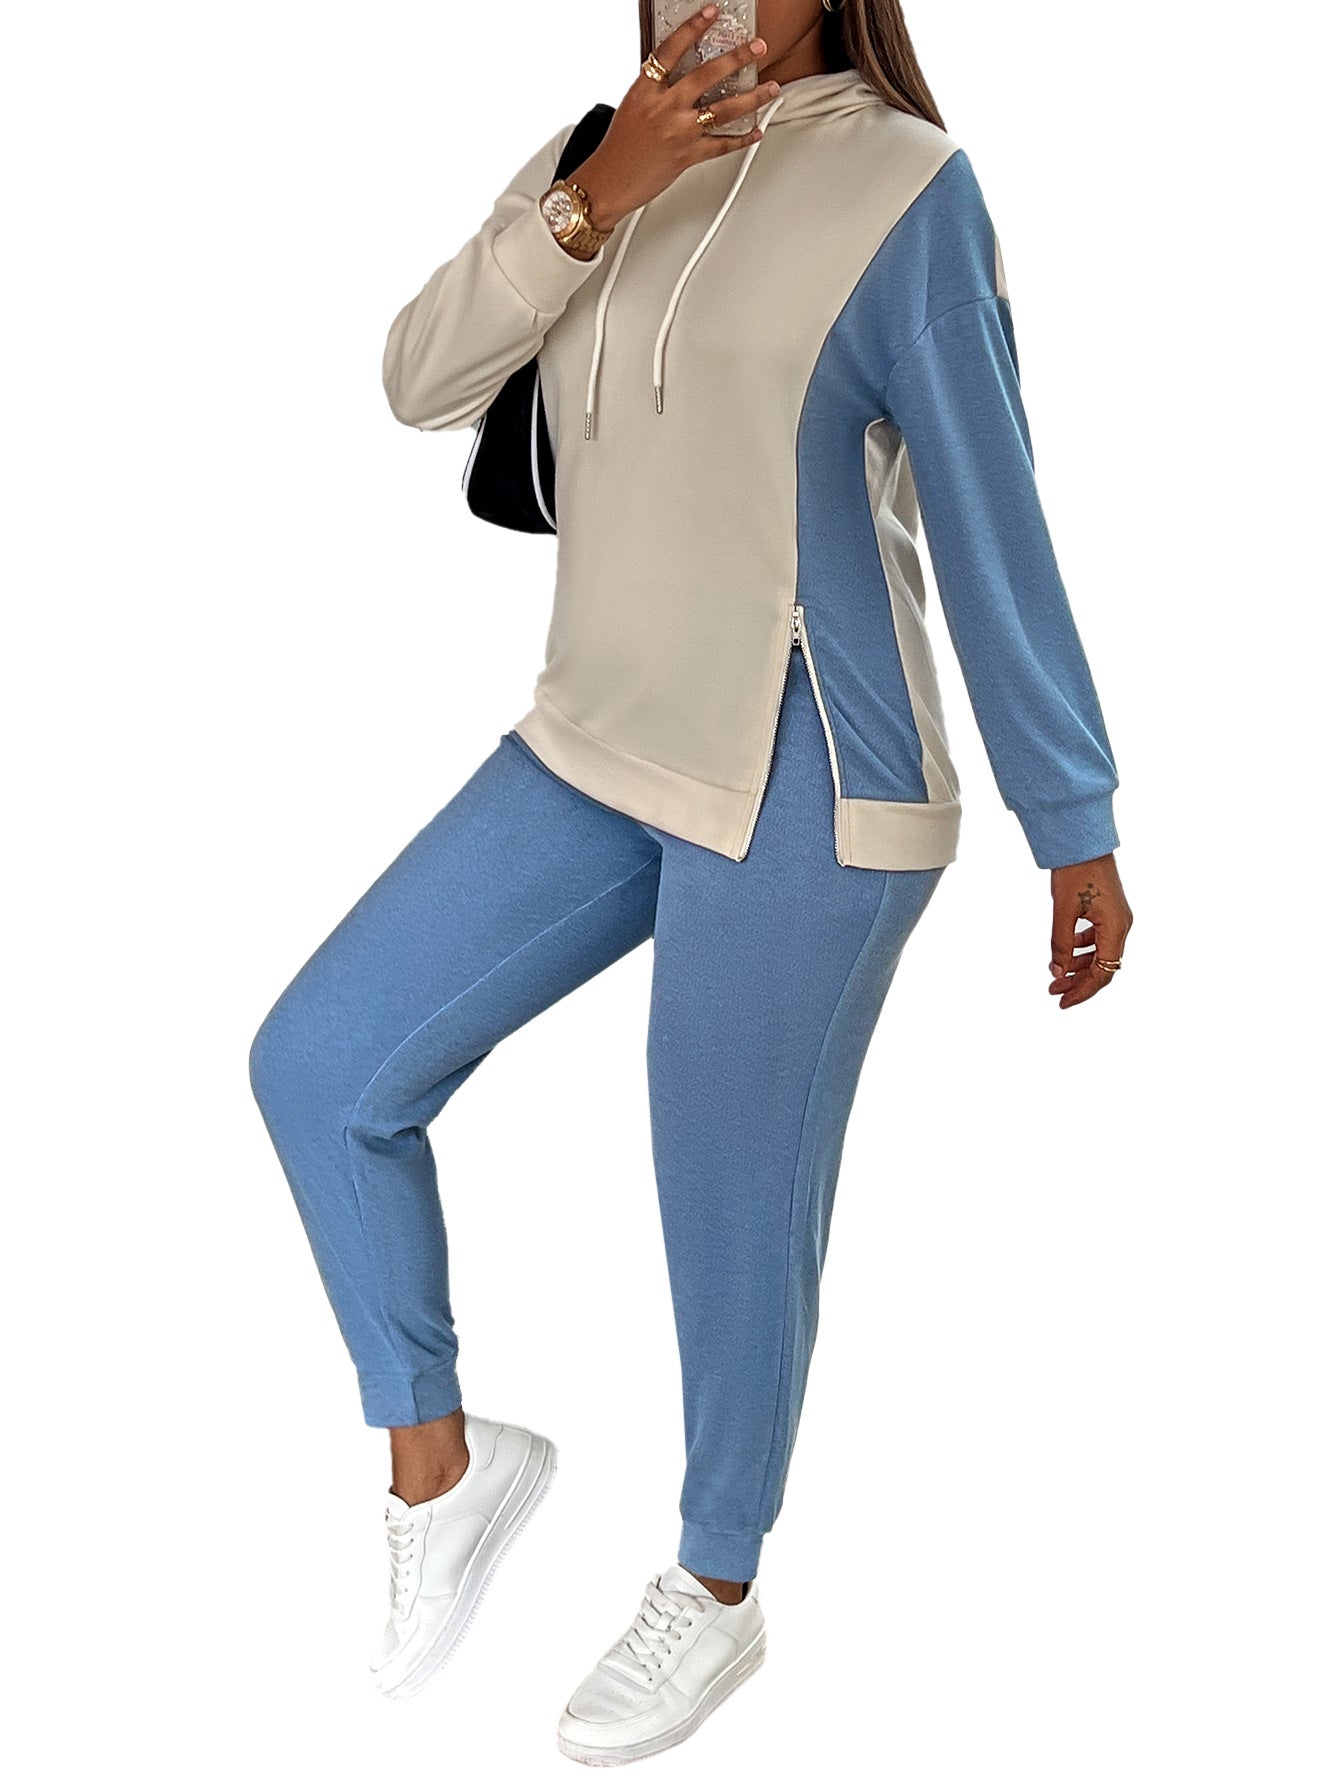 YESFASHION Women Zipper Colorblock Fashion Hooded Casual Suit